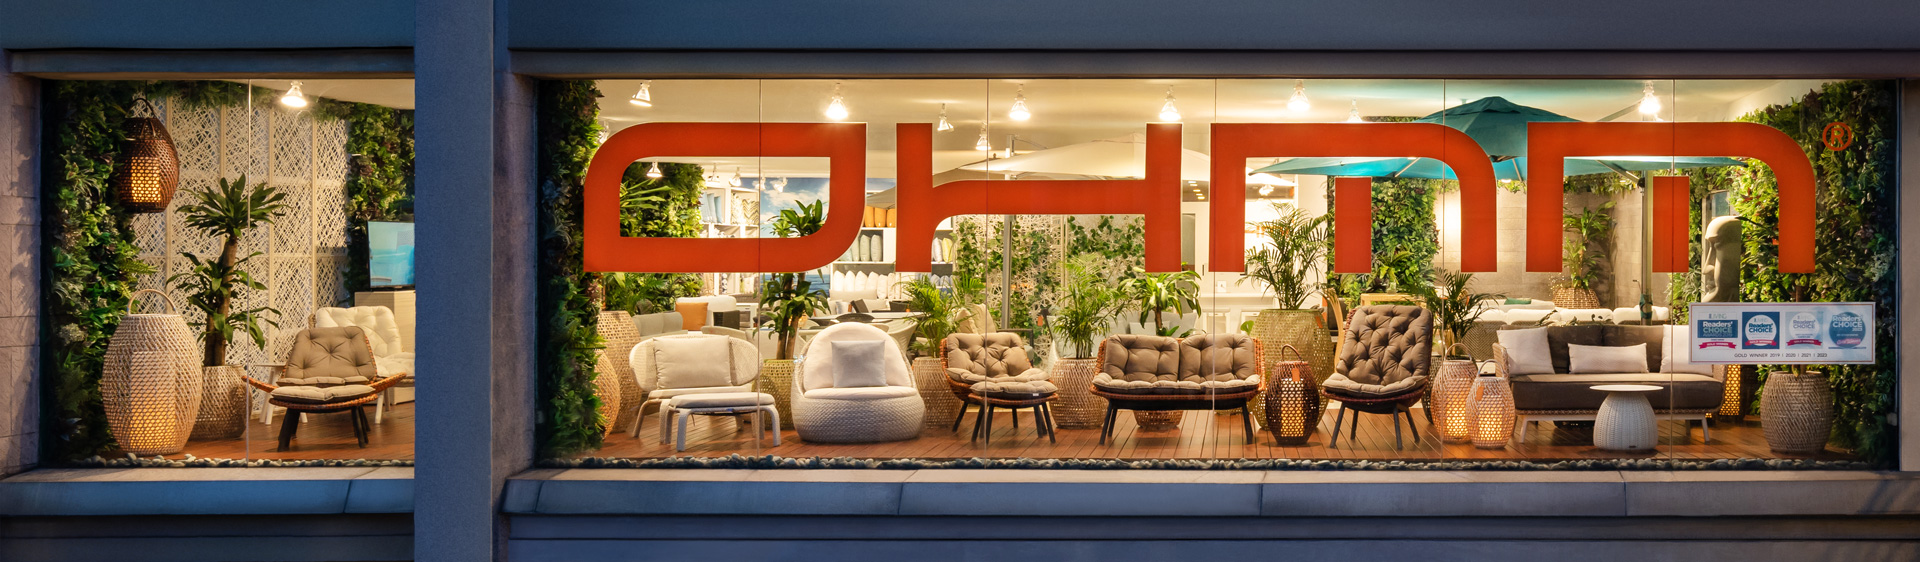 OHMM-outdoor-furniture-singapore-showroom